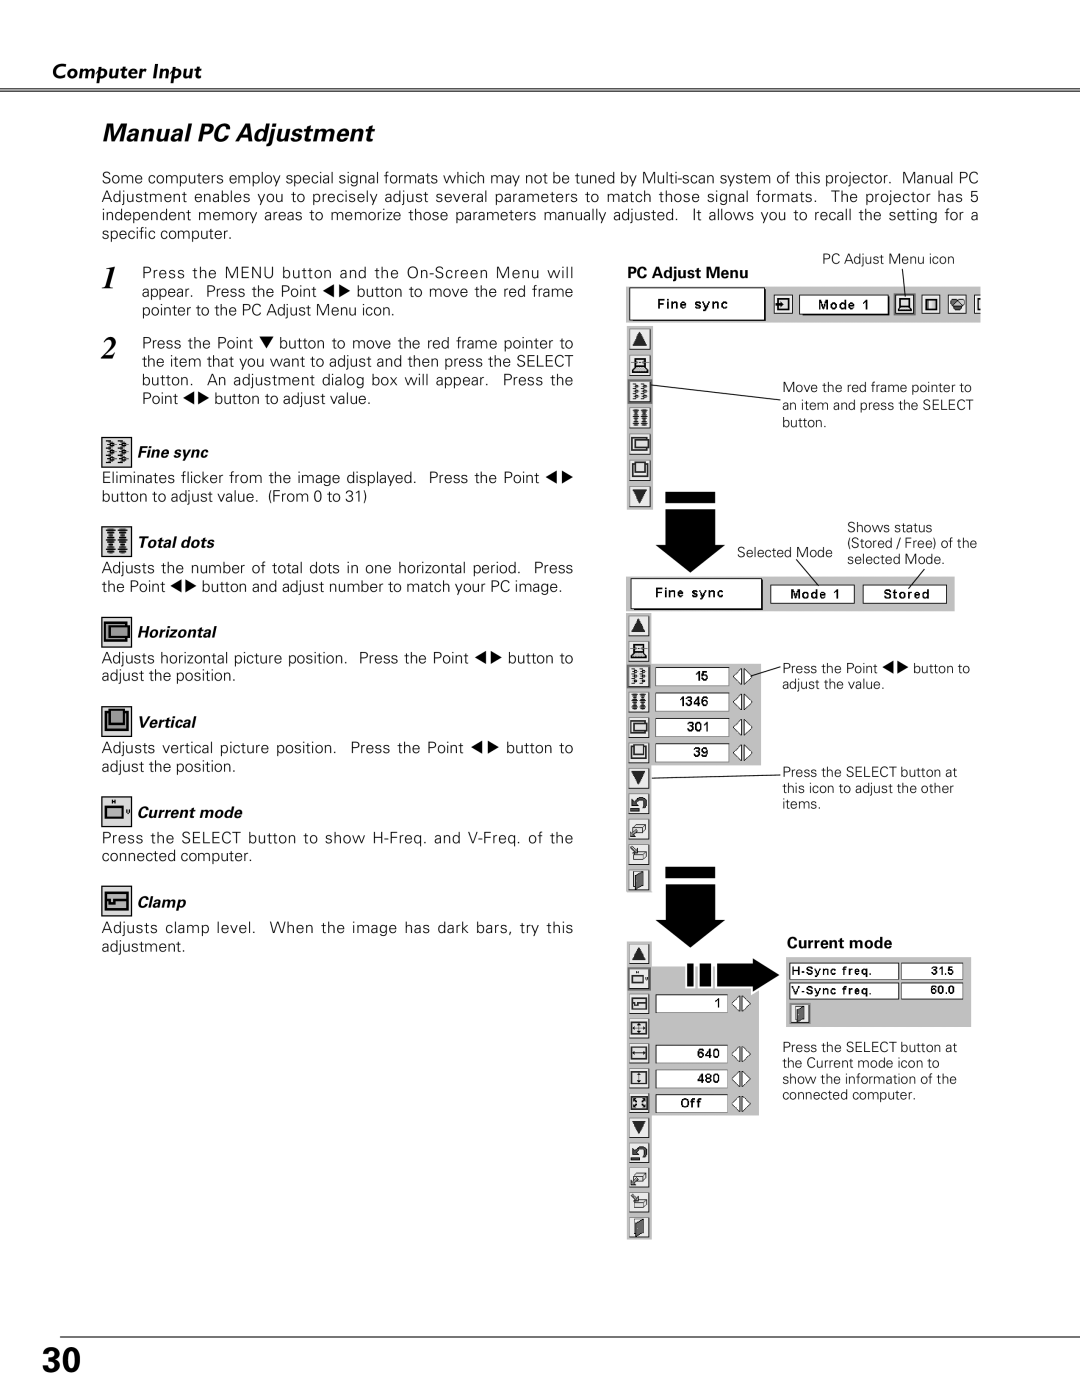 Eiki LC-SB21 Manual PC Adjustment, Computer Input, Fine sync, Total dots, Horizontal, Vertical, Current mode, Clamp 